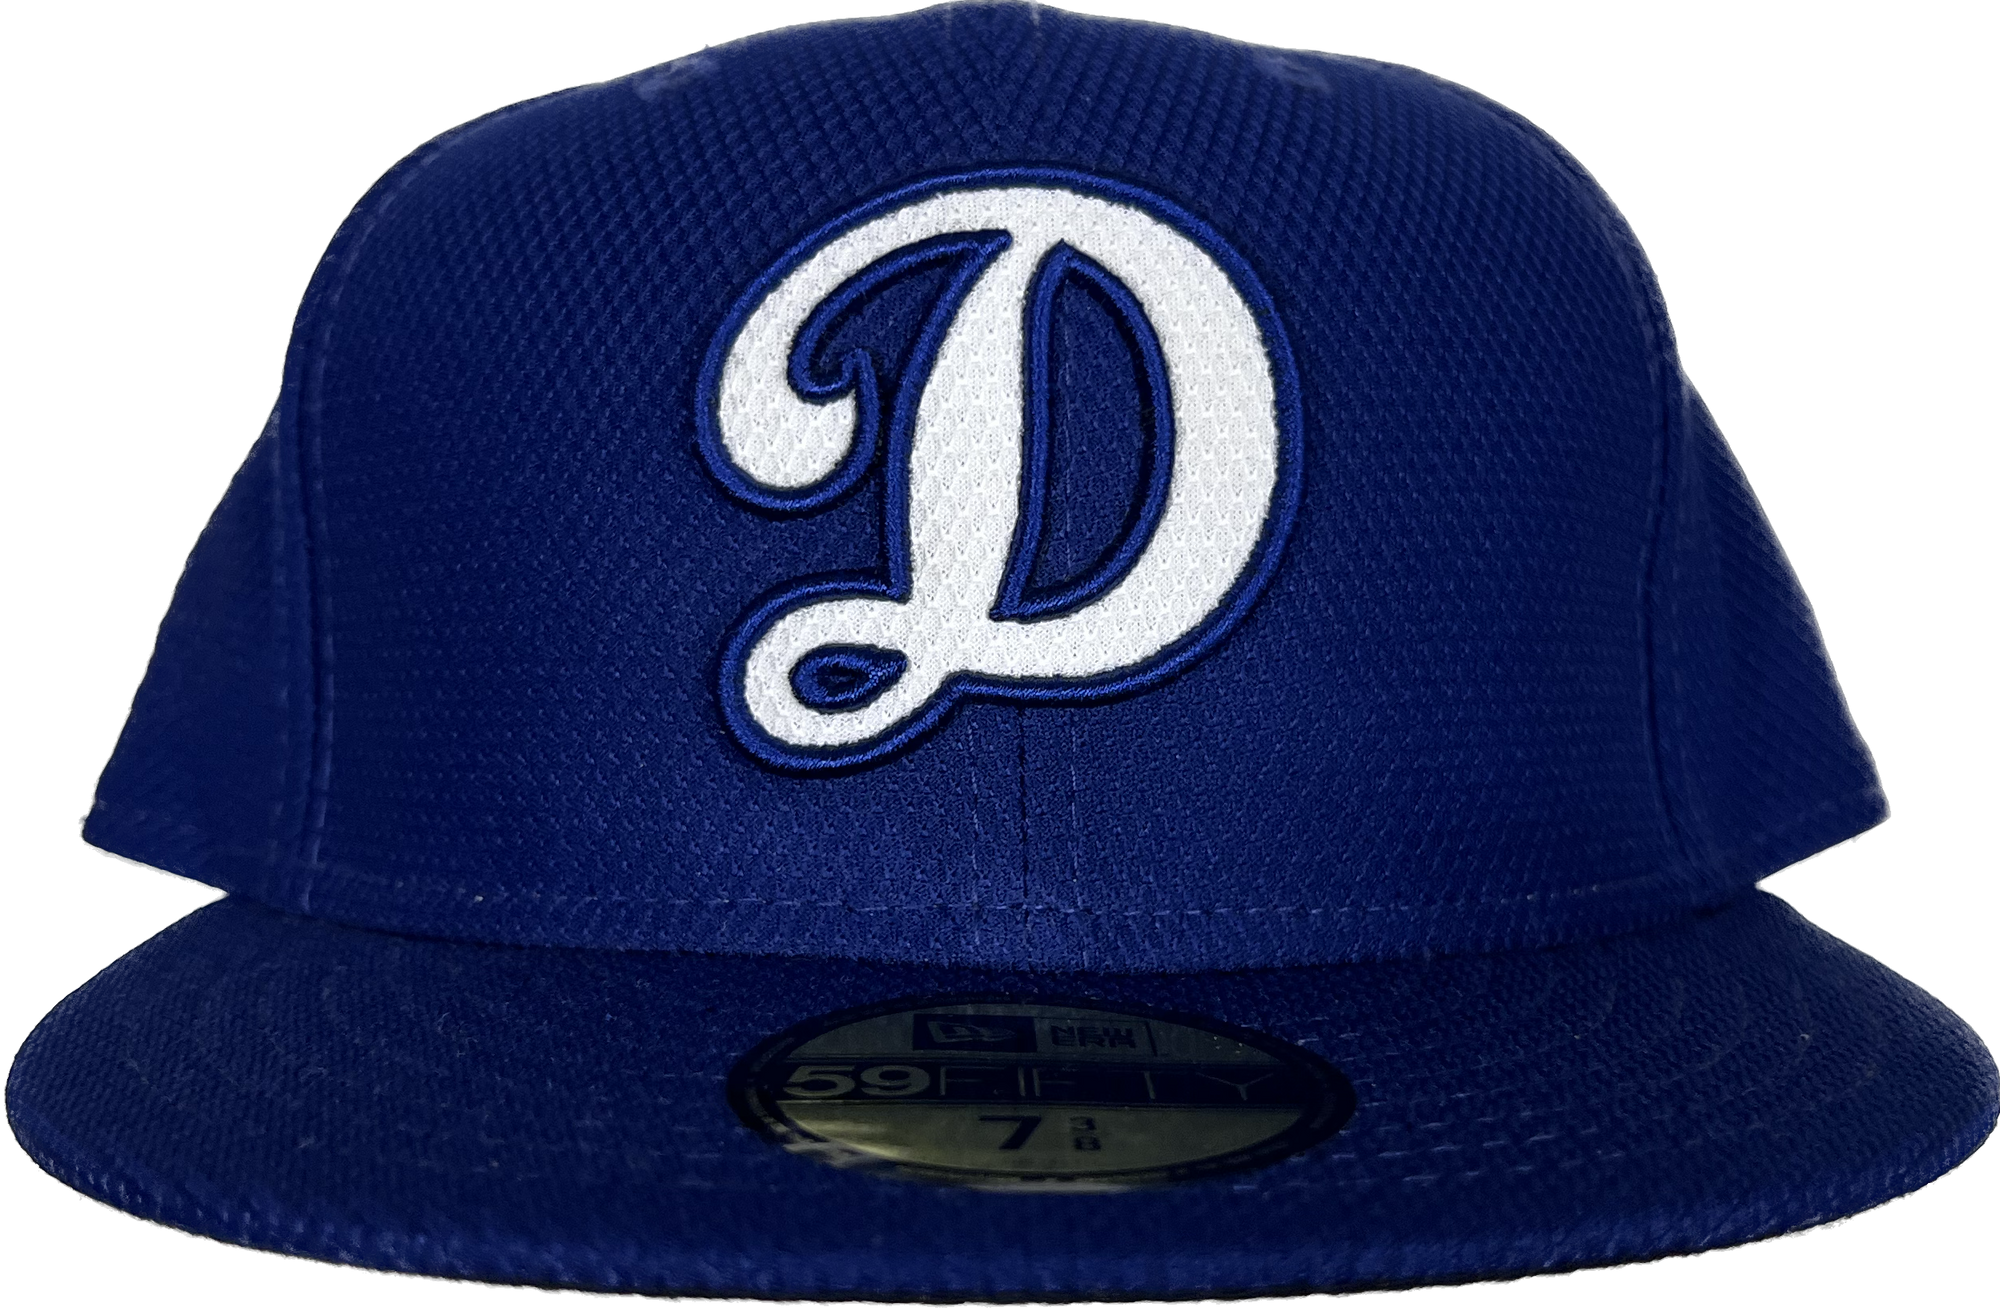 New Era Los Angeles Dodgers Diamond Era Fitted